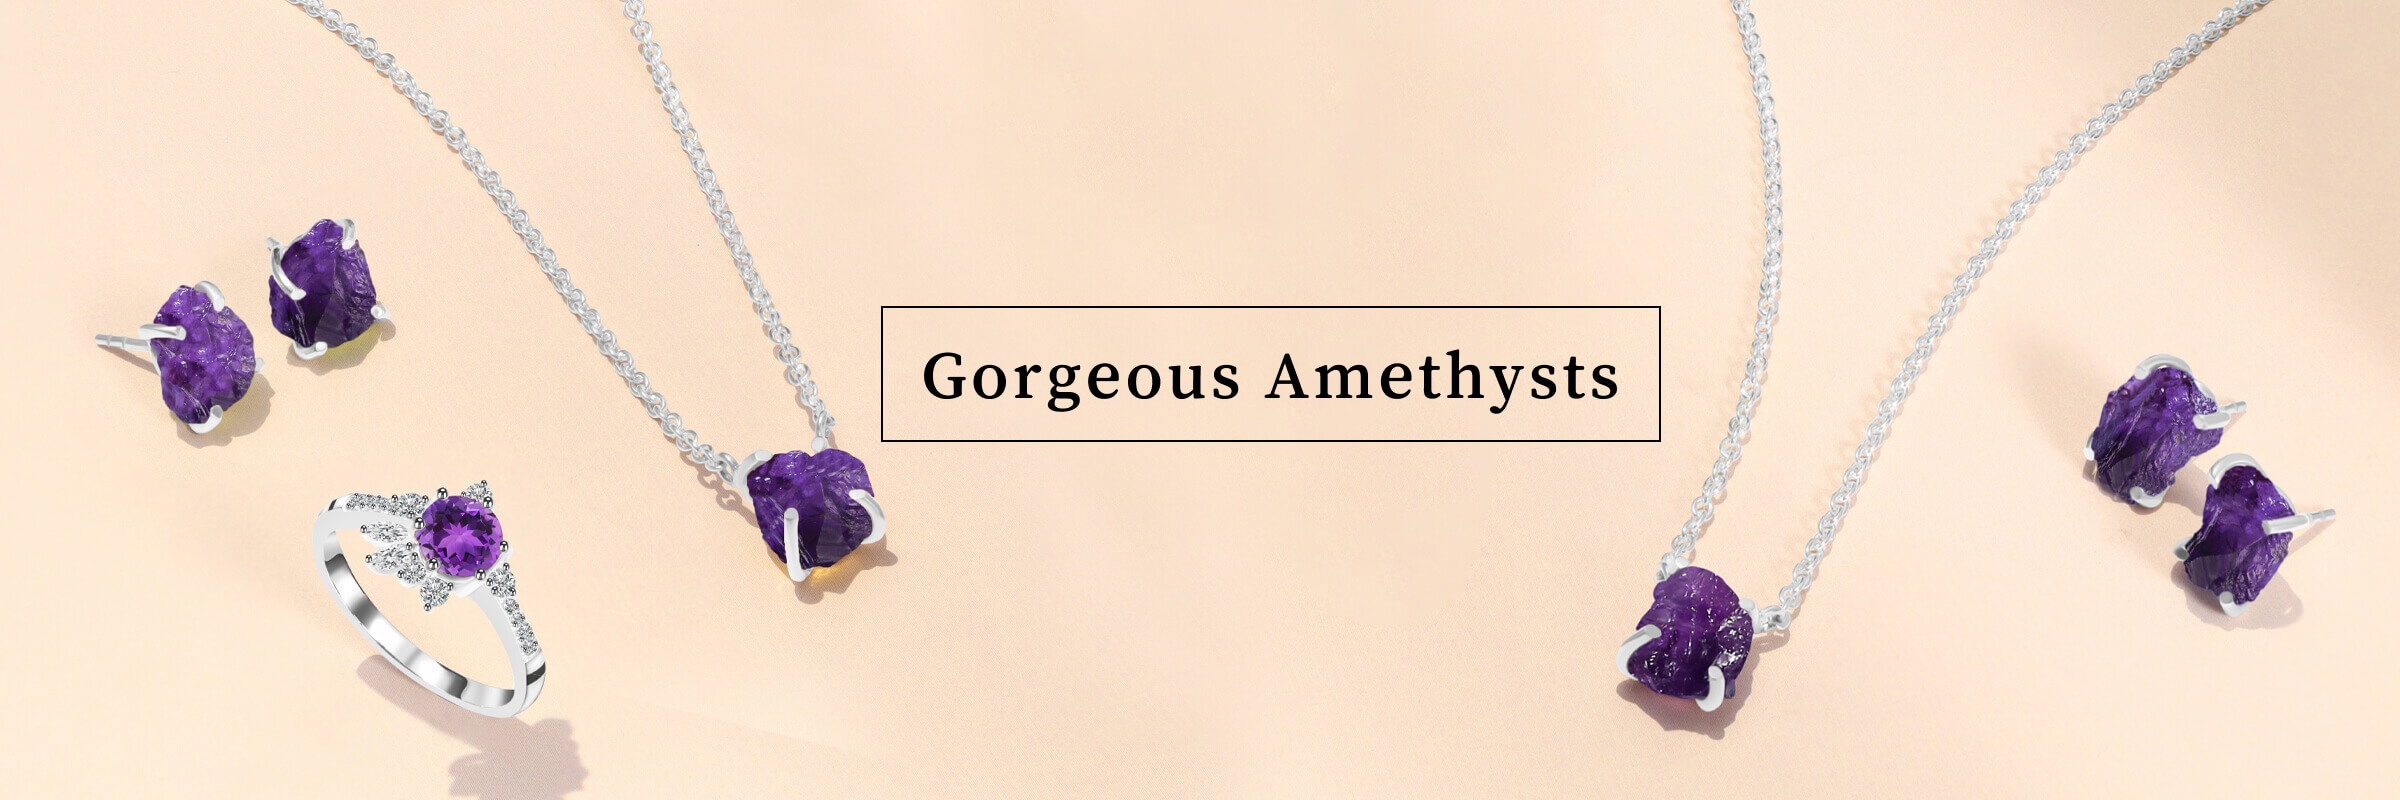 Amethyst Jewelry